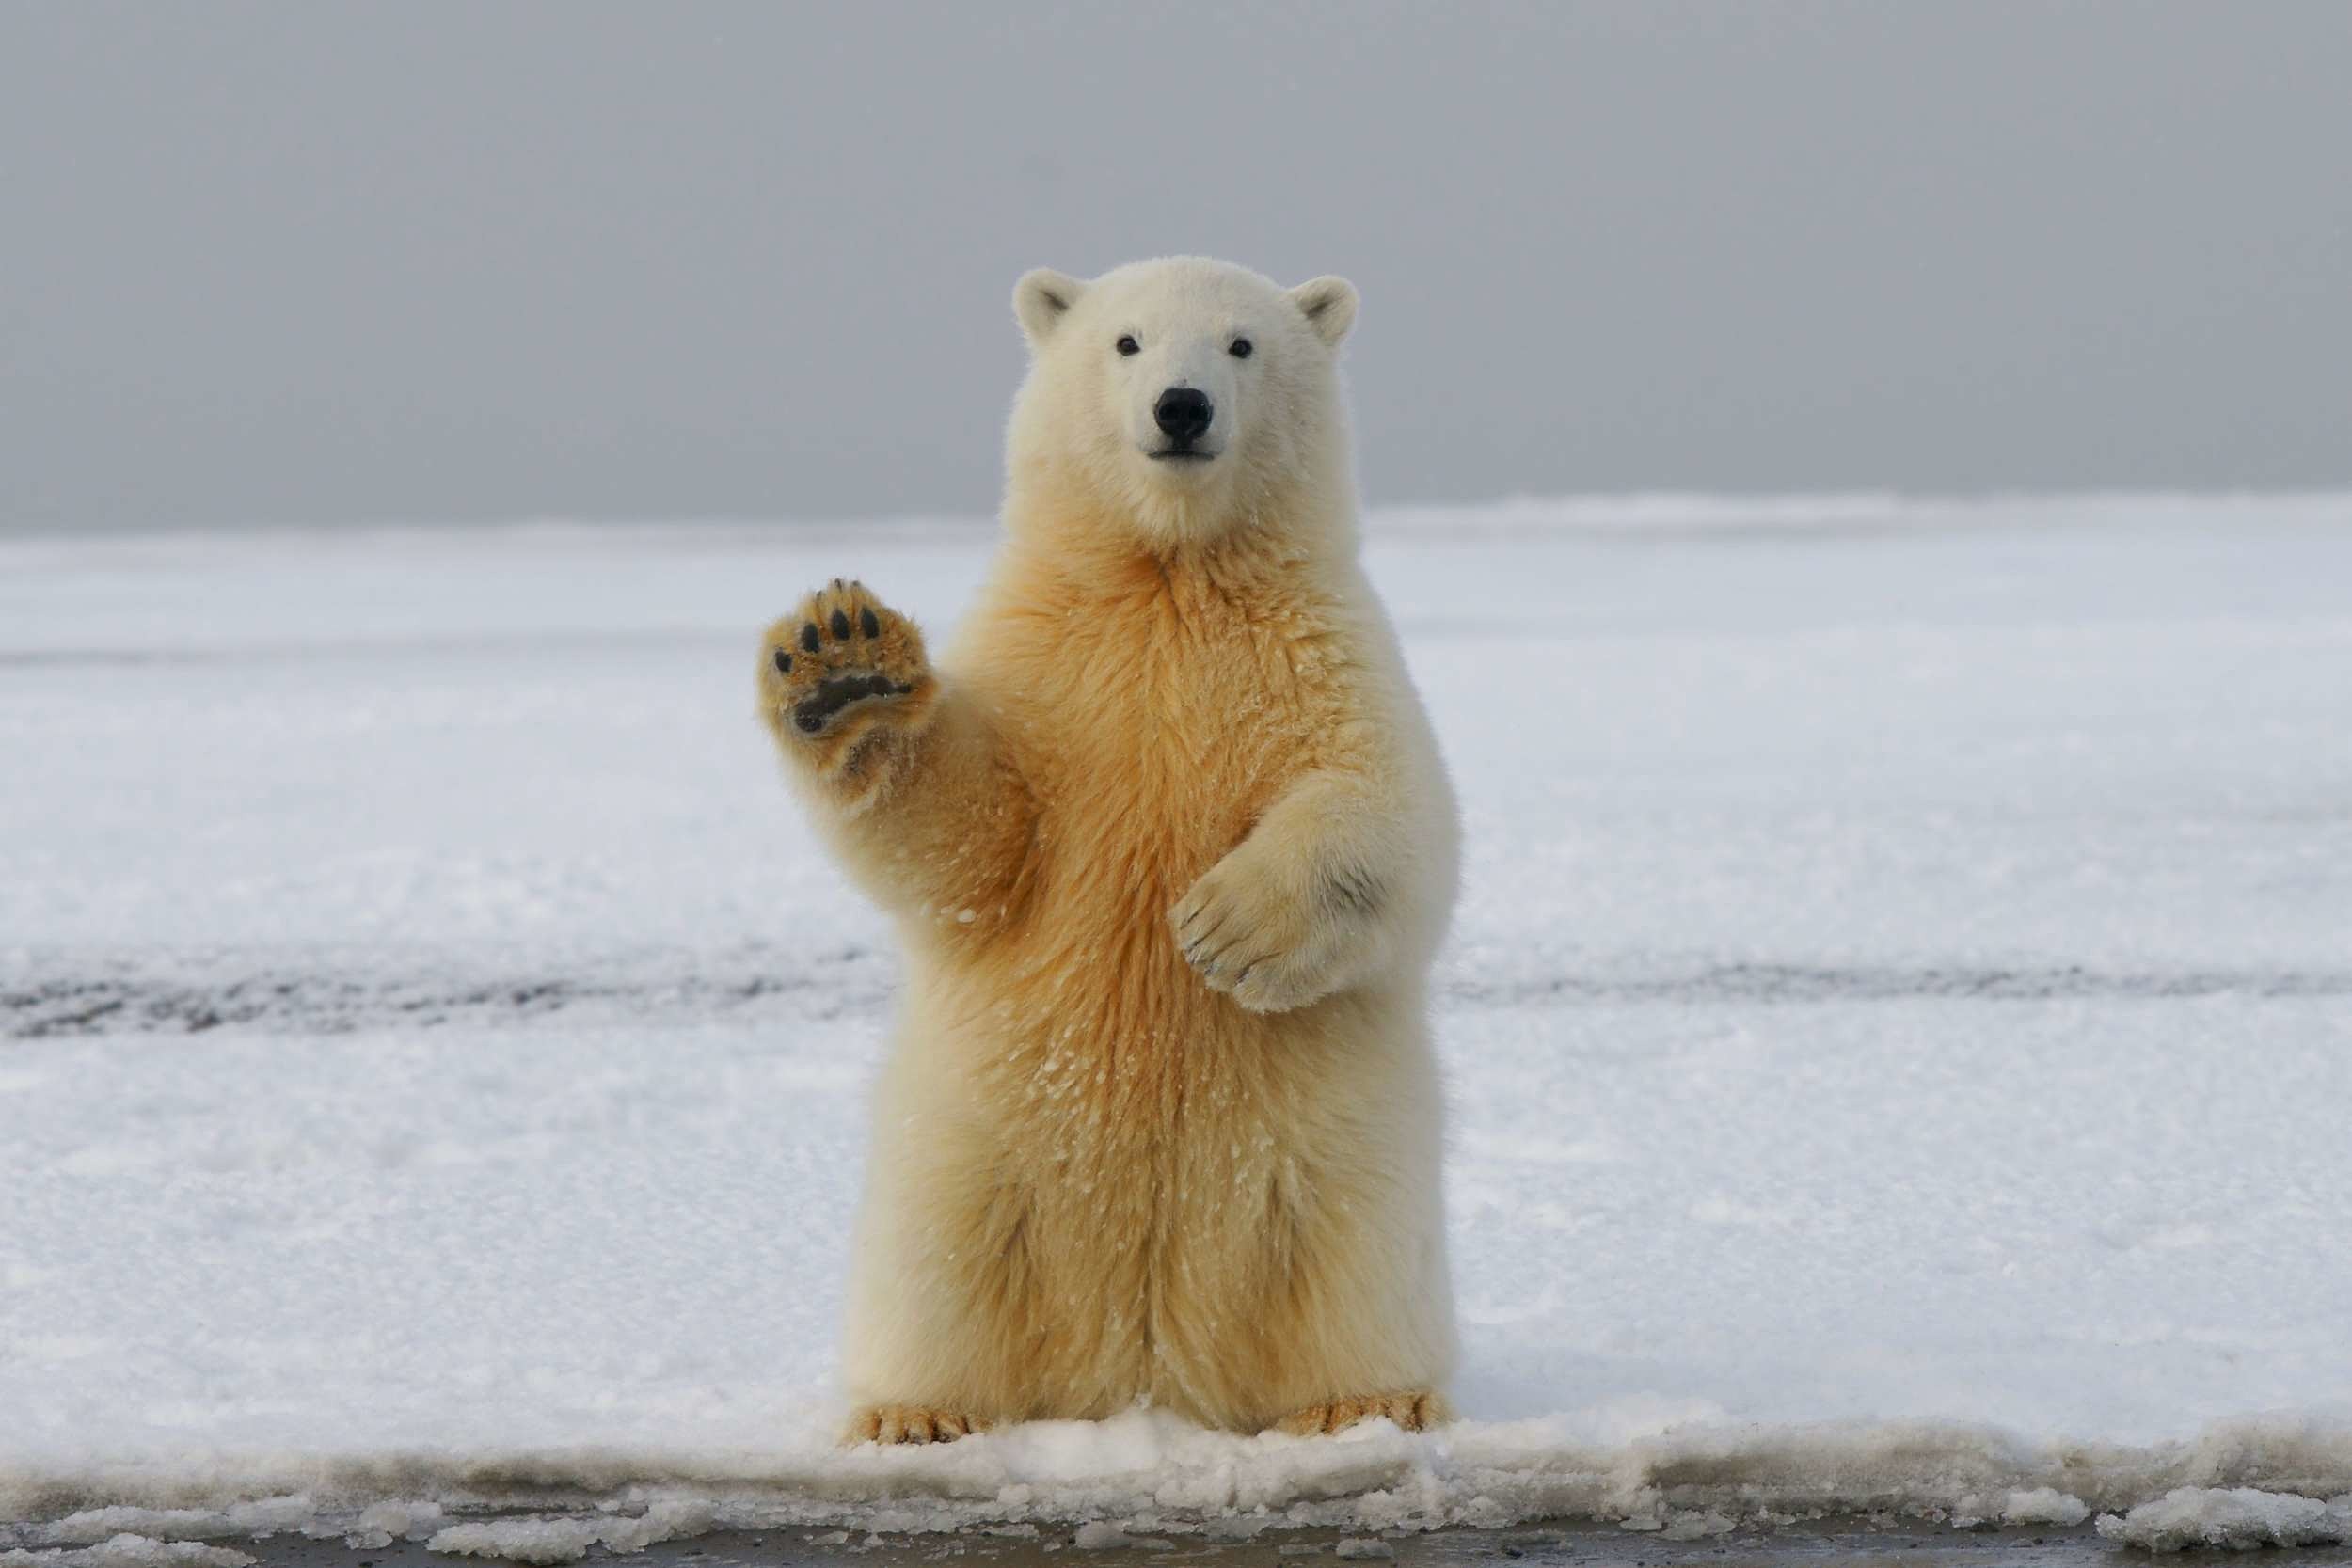 A polar bear standing upright on snowy ground. (photo © Hans-Jurgen Mager via Unsplash)